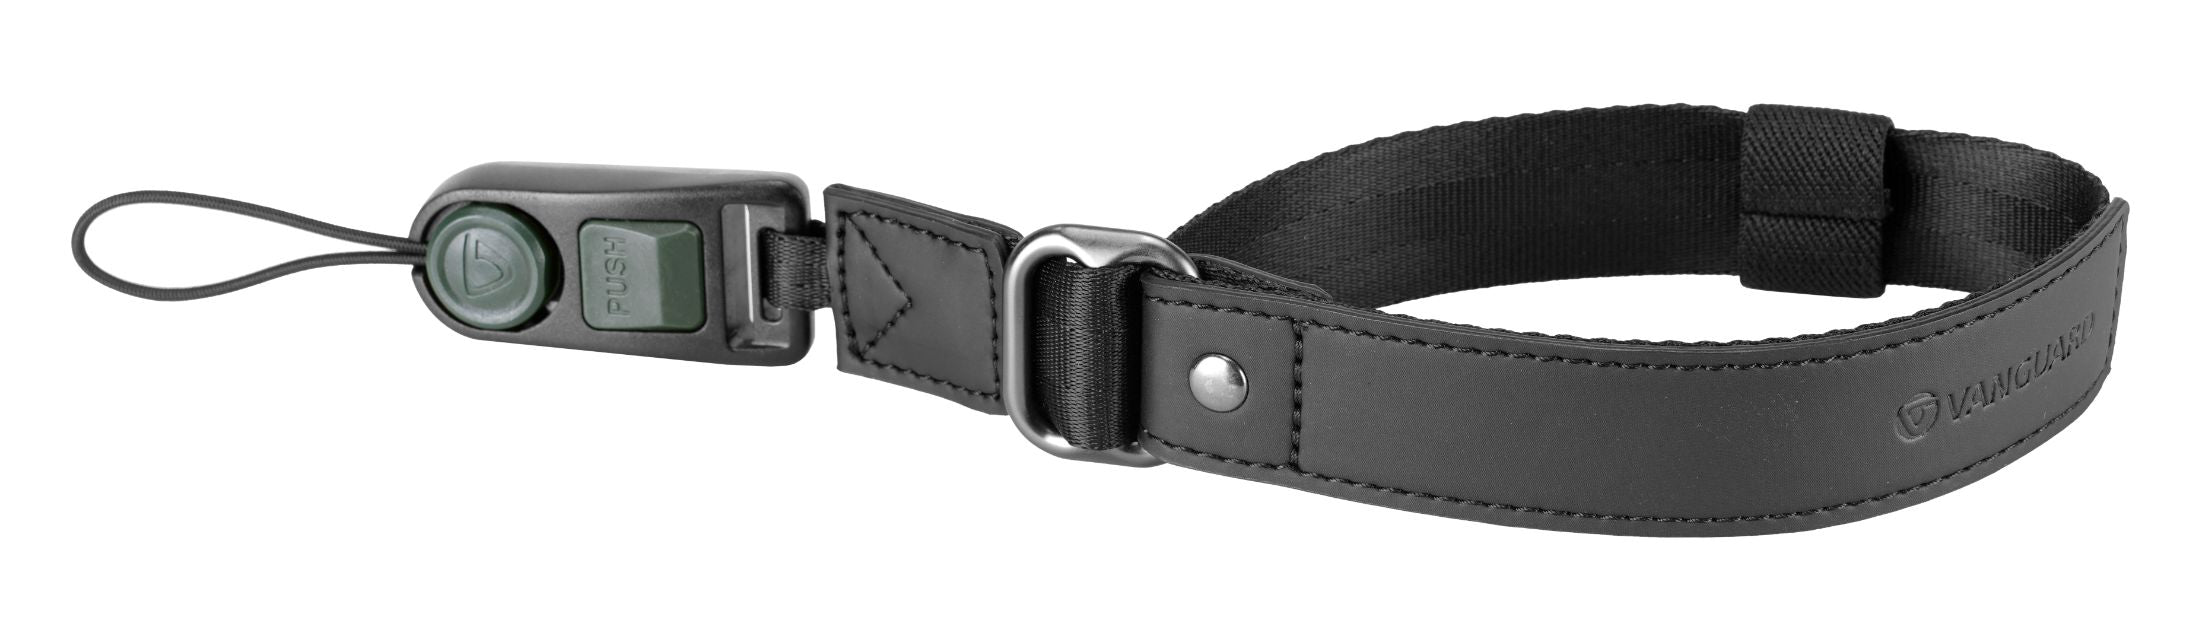 Product Image of Vanguard VEO Optic Guard WS Wrist Strap - Black